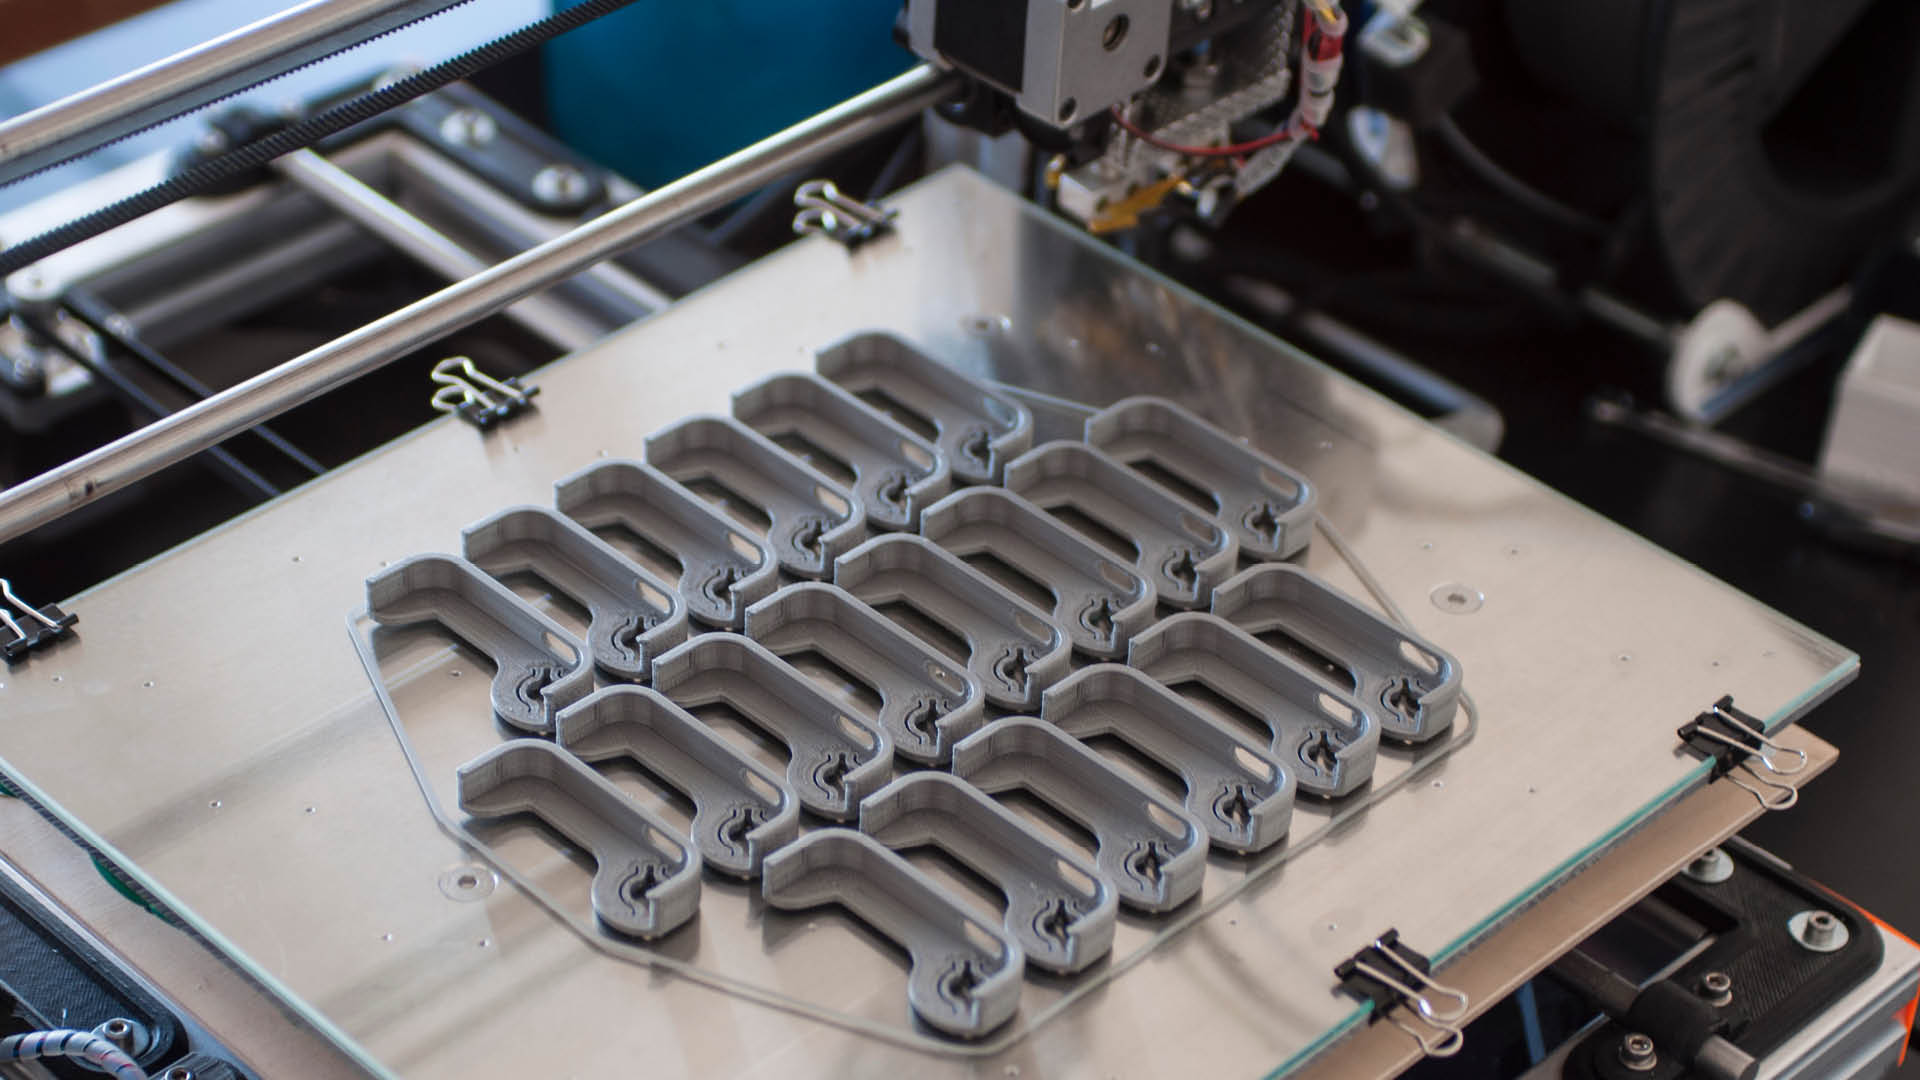 3D printed iCROS shells